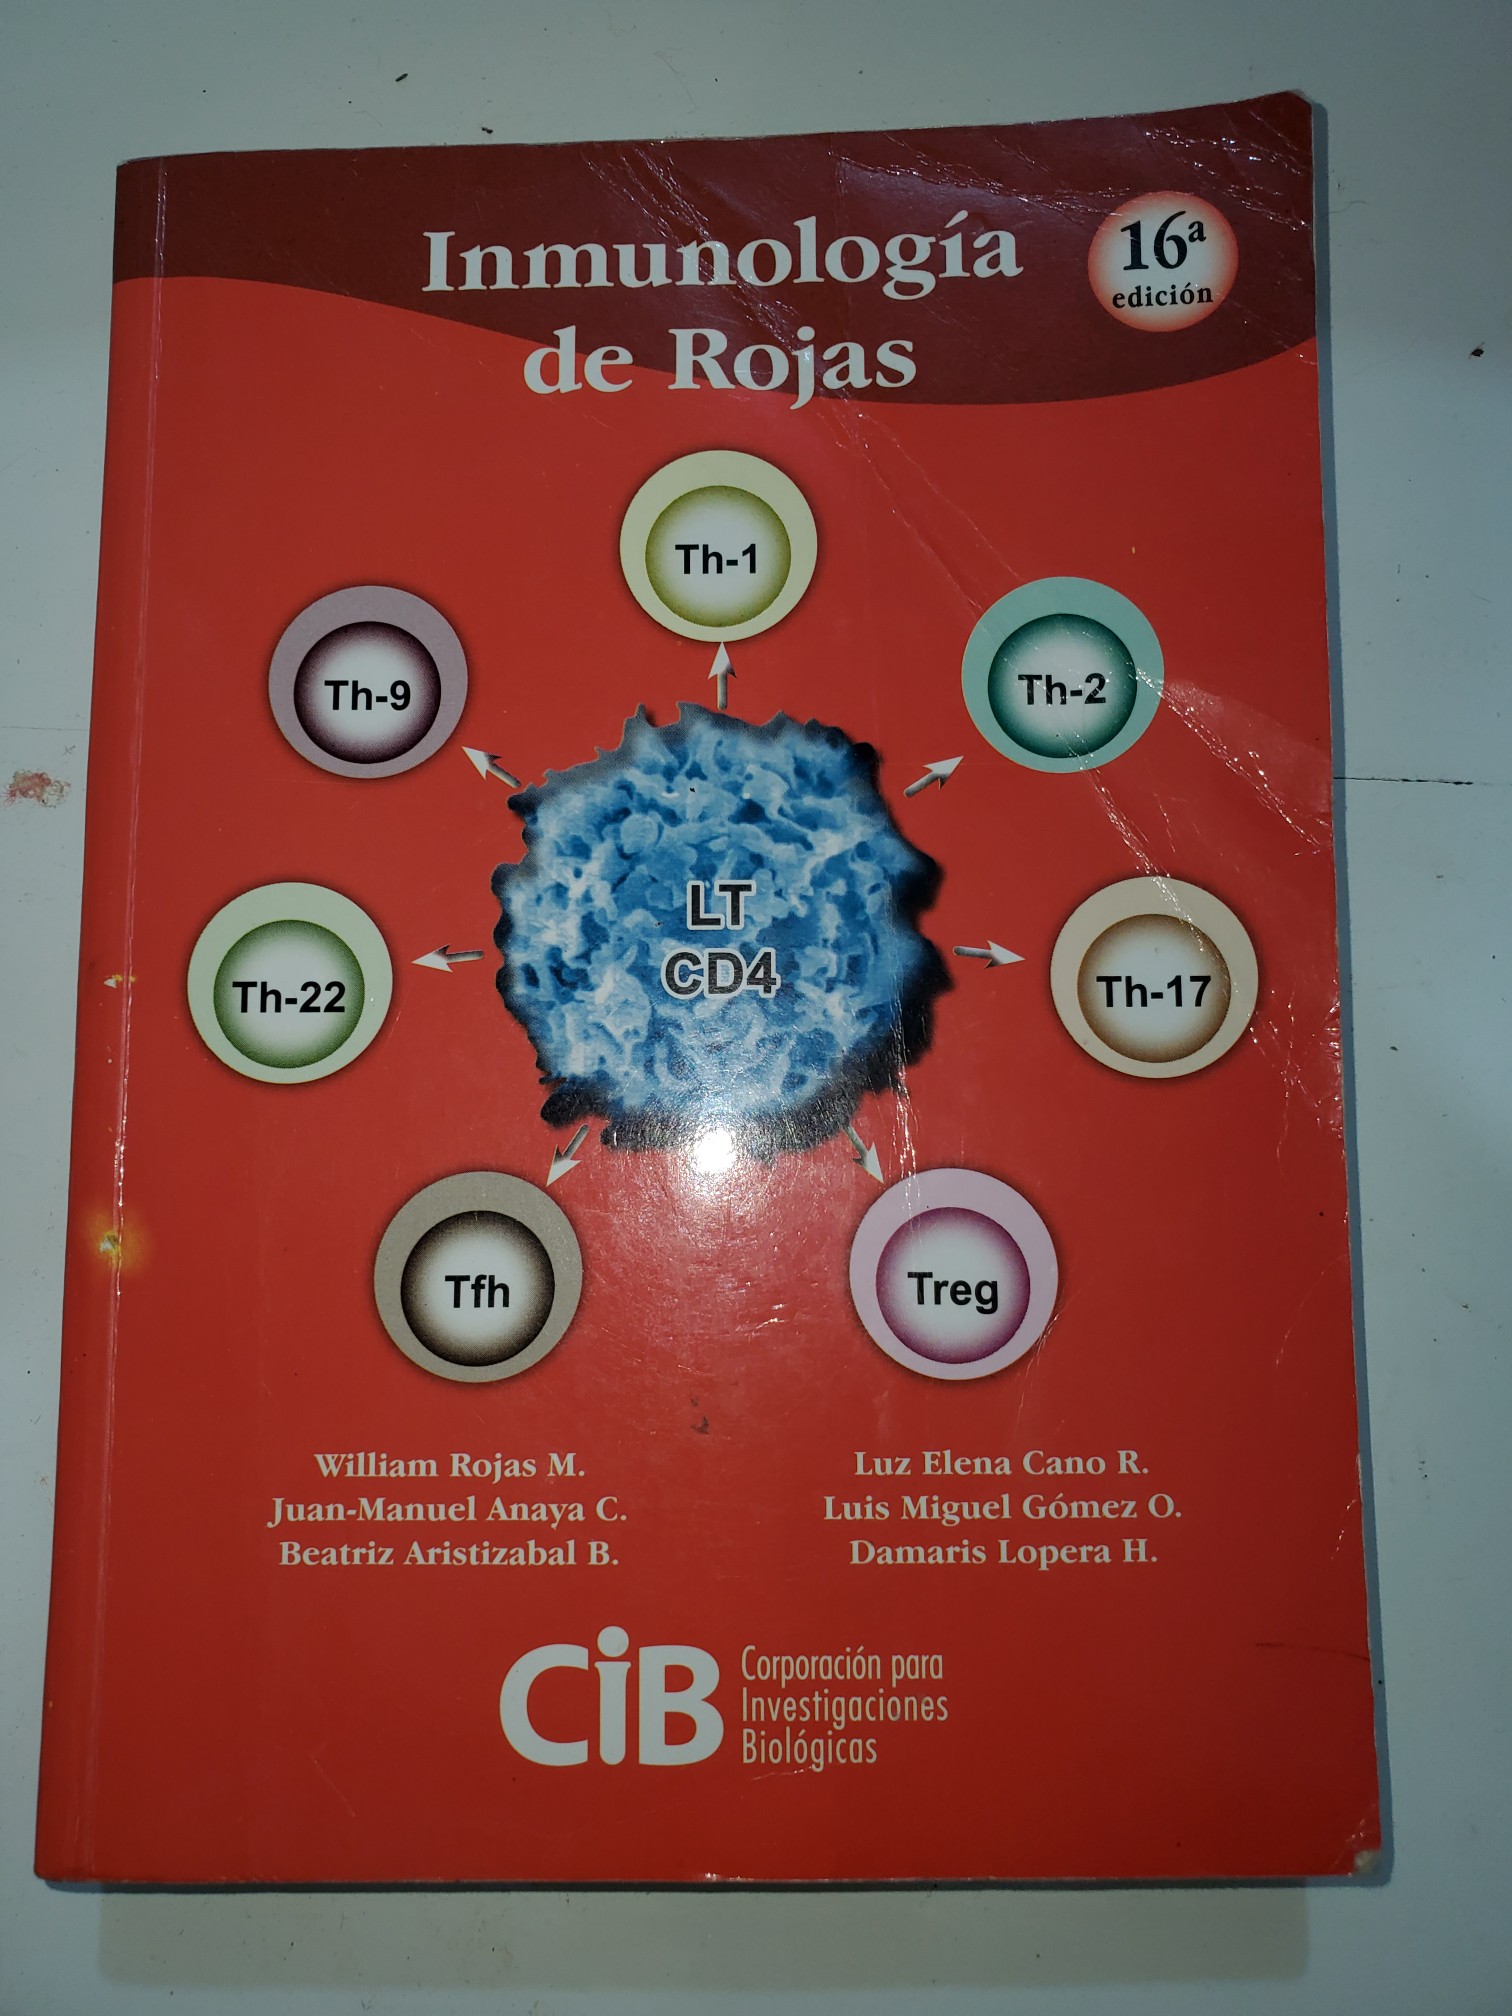 Inmunologia de Rojas 16a Edición